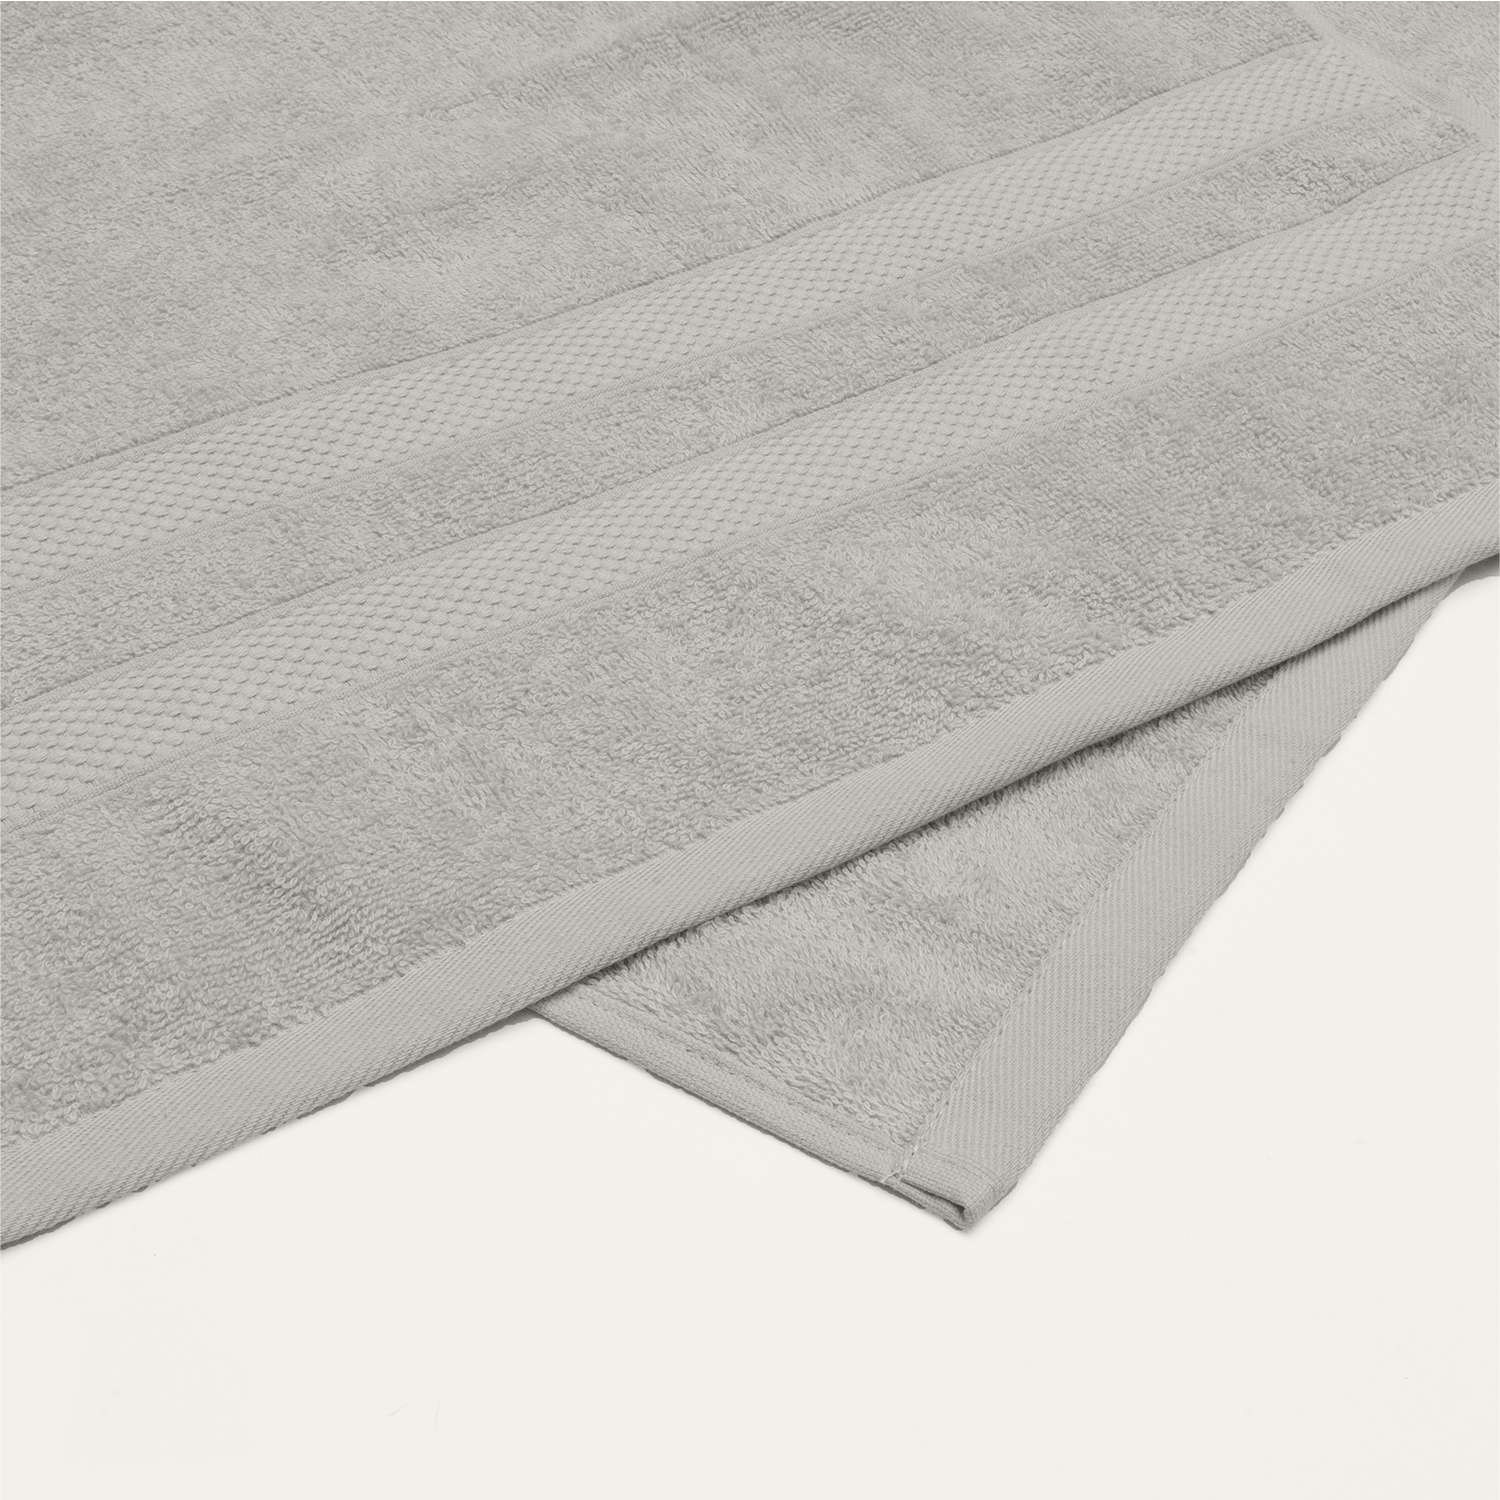 Набор махровых полотенец Unifico Nature светло-серый набор из 3 шт.:30х60-1и 50х80-1и70х130-1 - фото 8